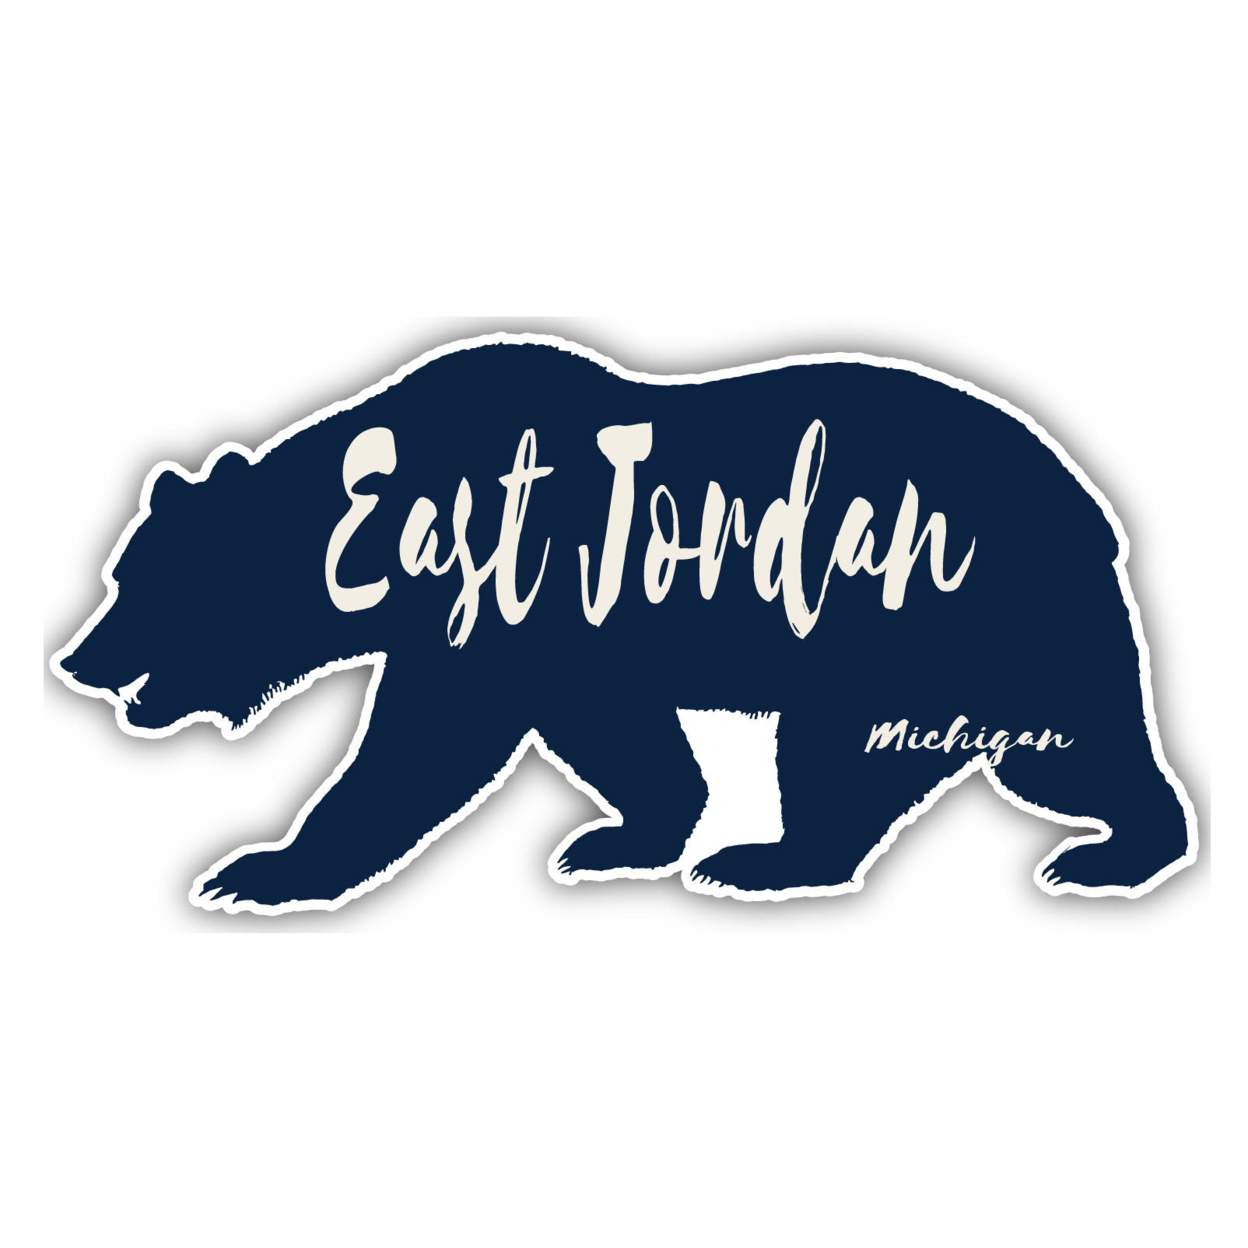 East Jordan Michigan Souvenir Decorative Stickers (Choose Theme And Size) - 4-Pack, 2-Inch, Bear